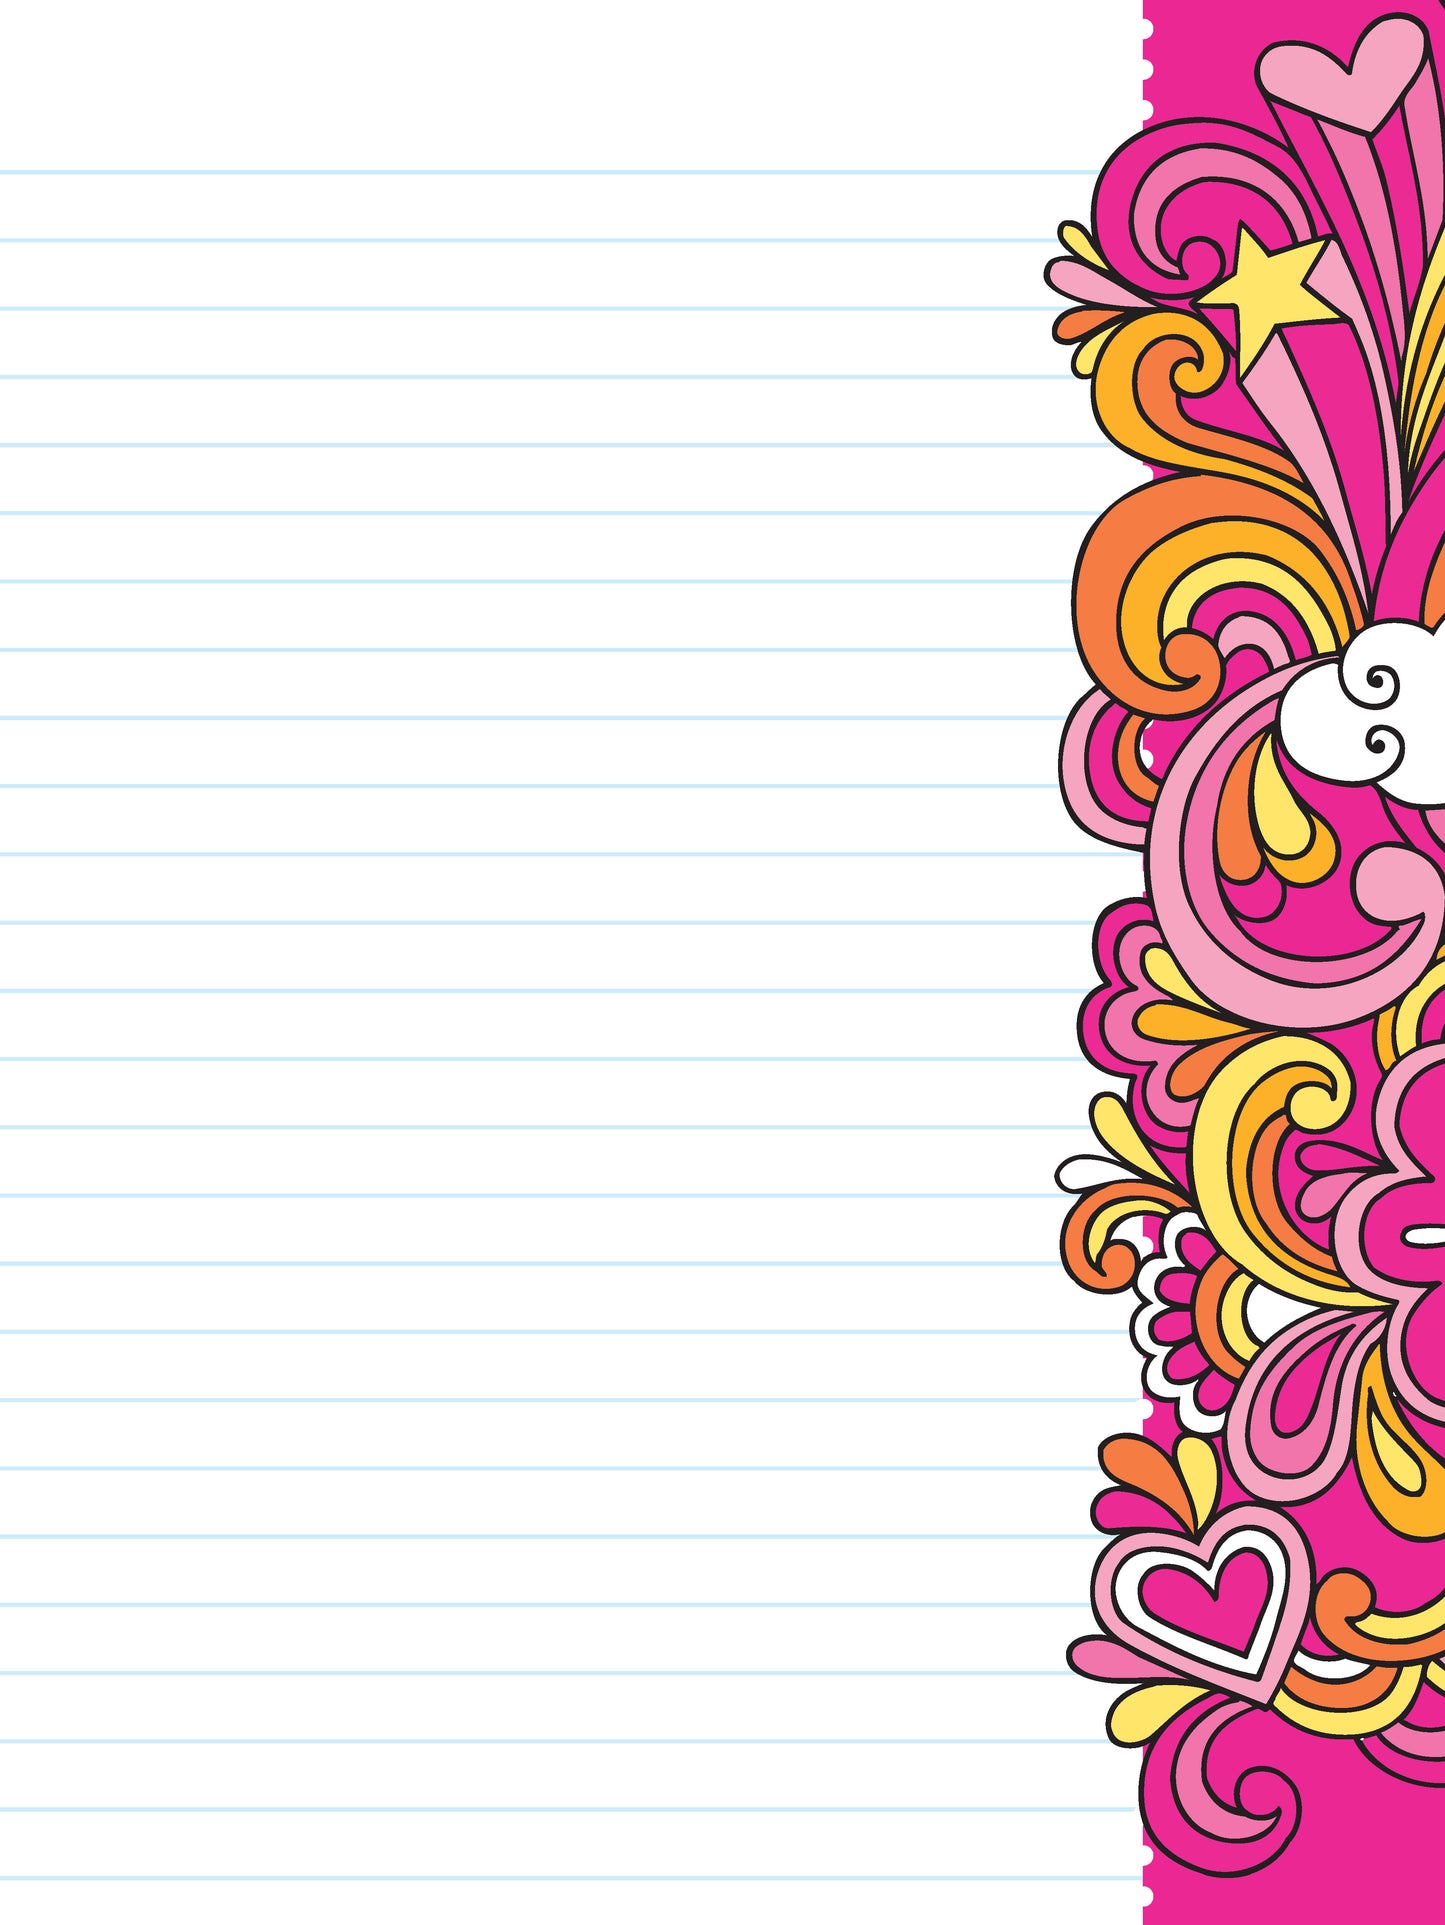 Notebook Doodles Go Girl! Guided Journal